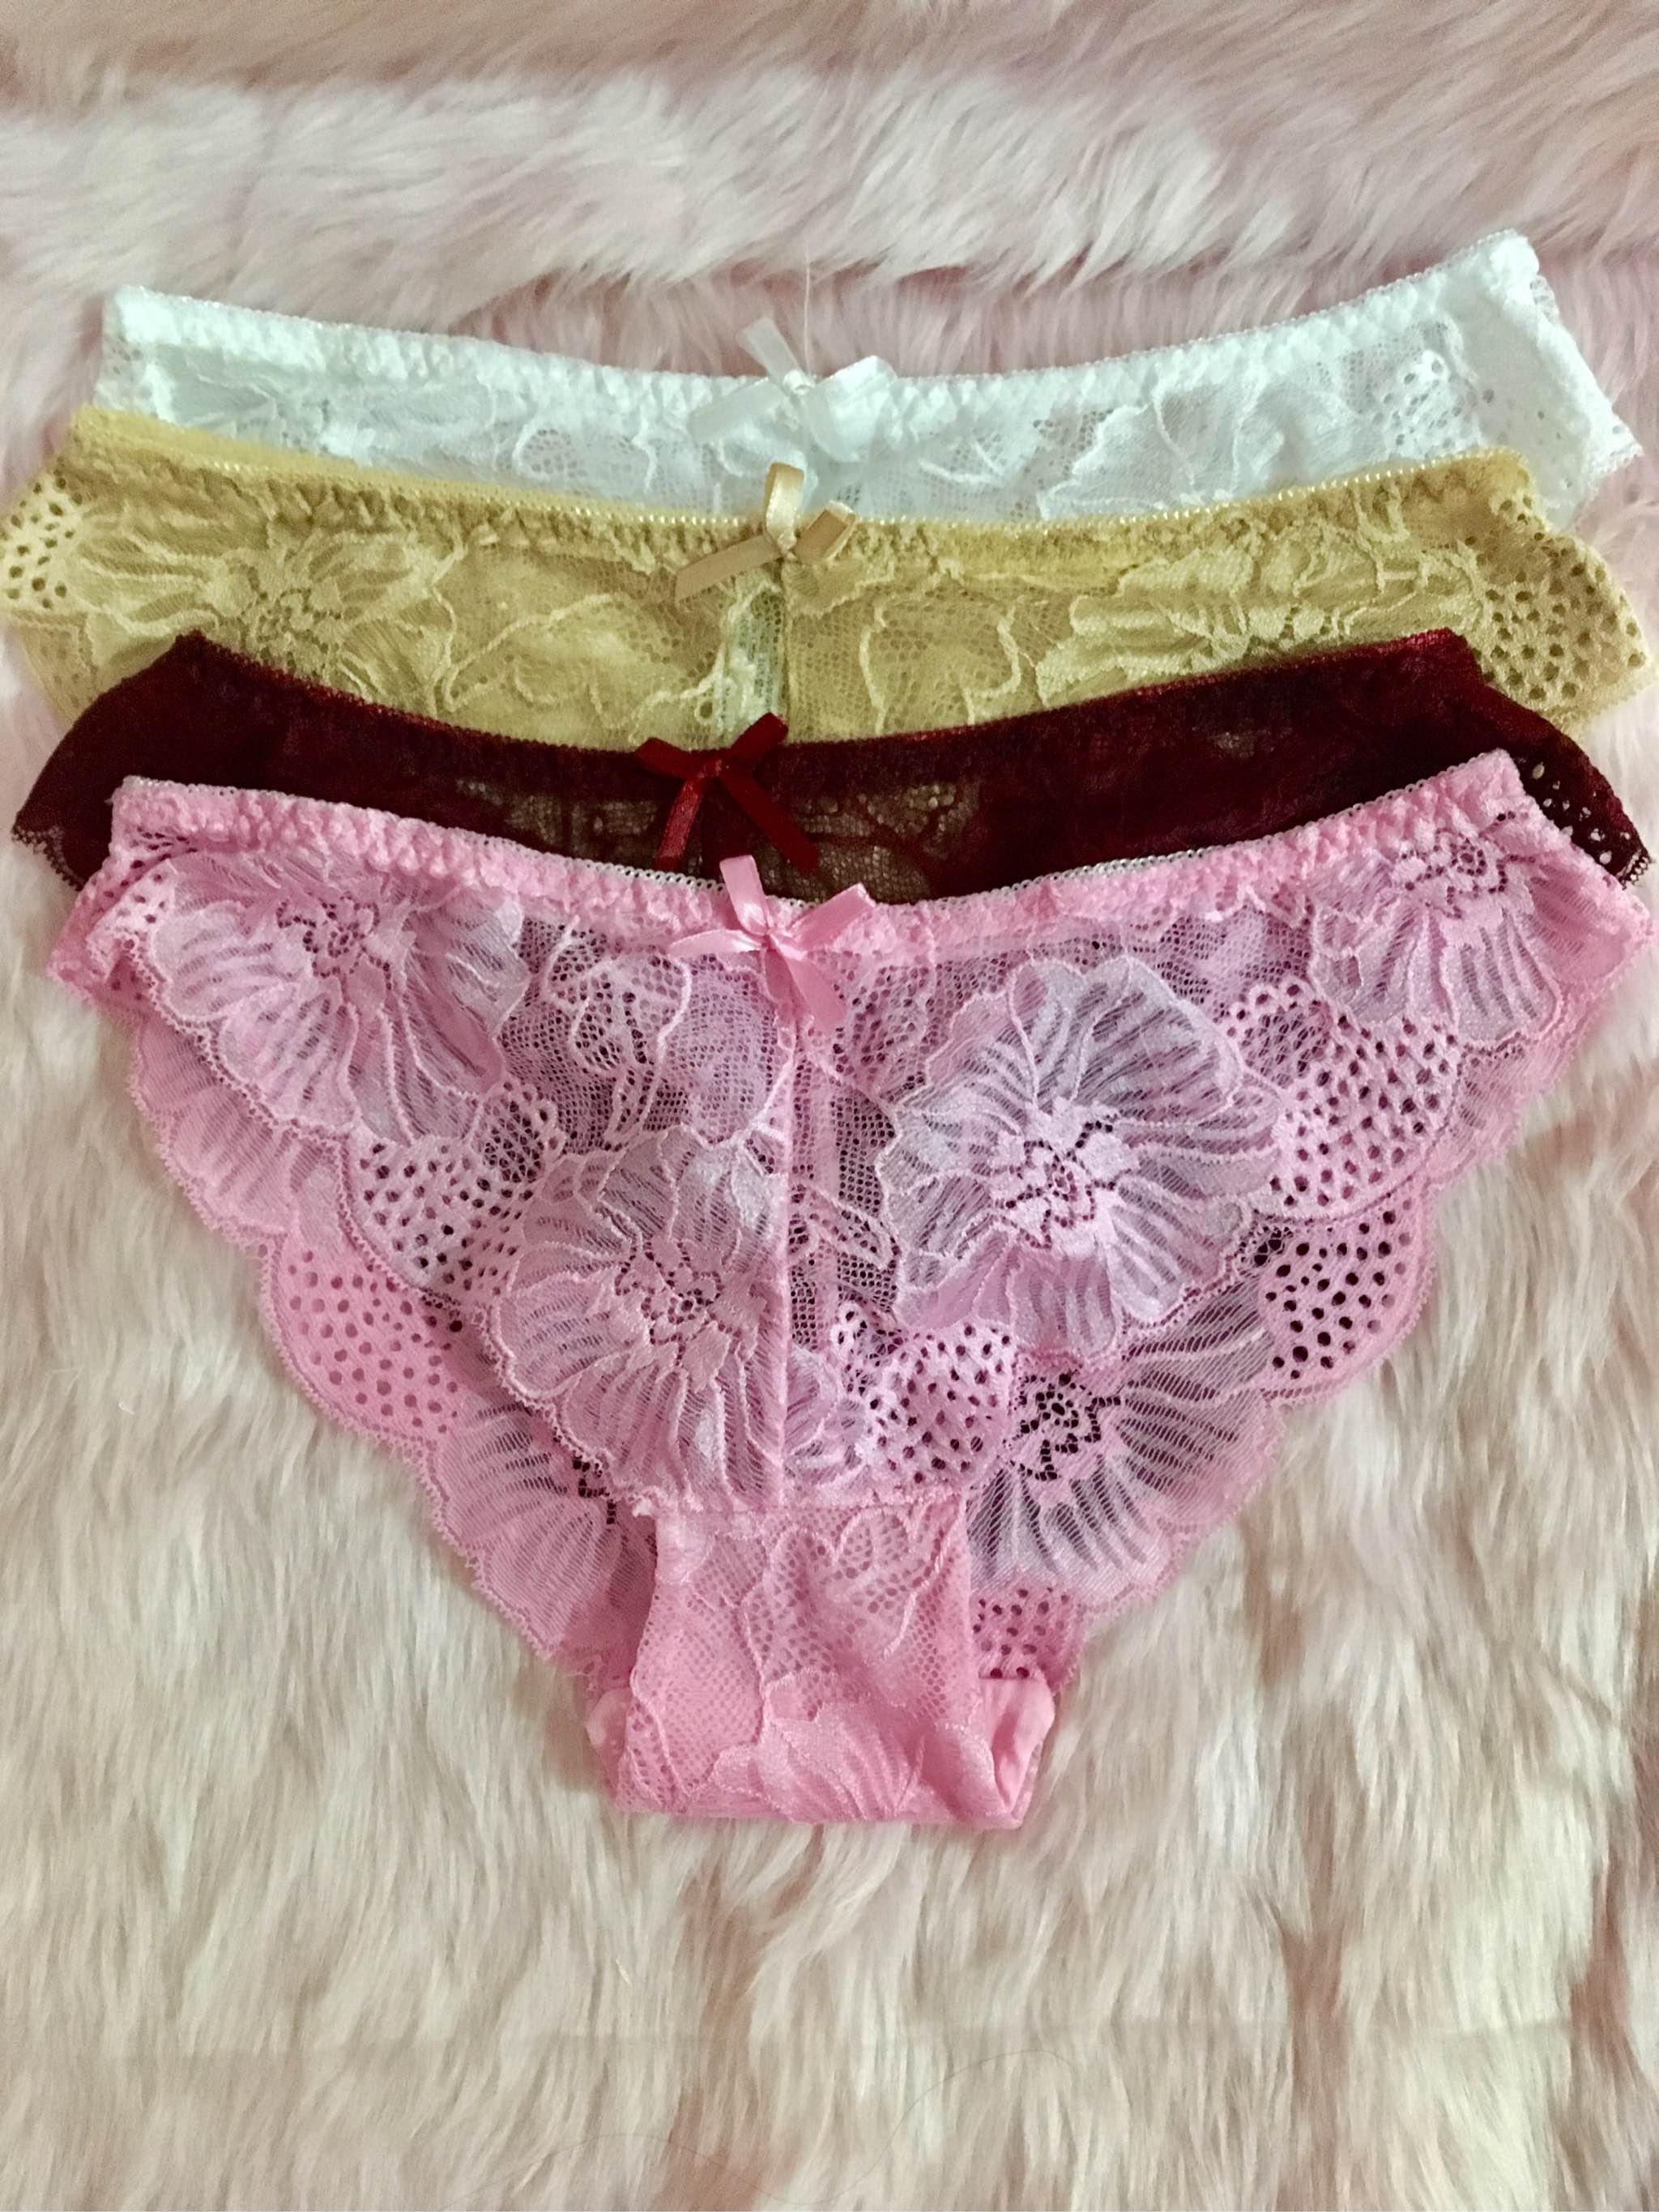 4Pcs/lot Women Underwear Seamless Lace Women Girls Briefs Panties Female  Underwear For Summer Waist Pants M-XL Size (Ready Stock)